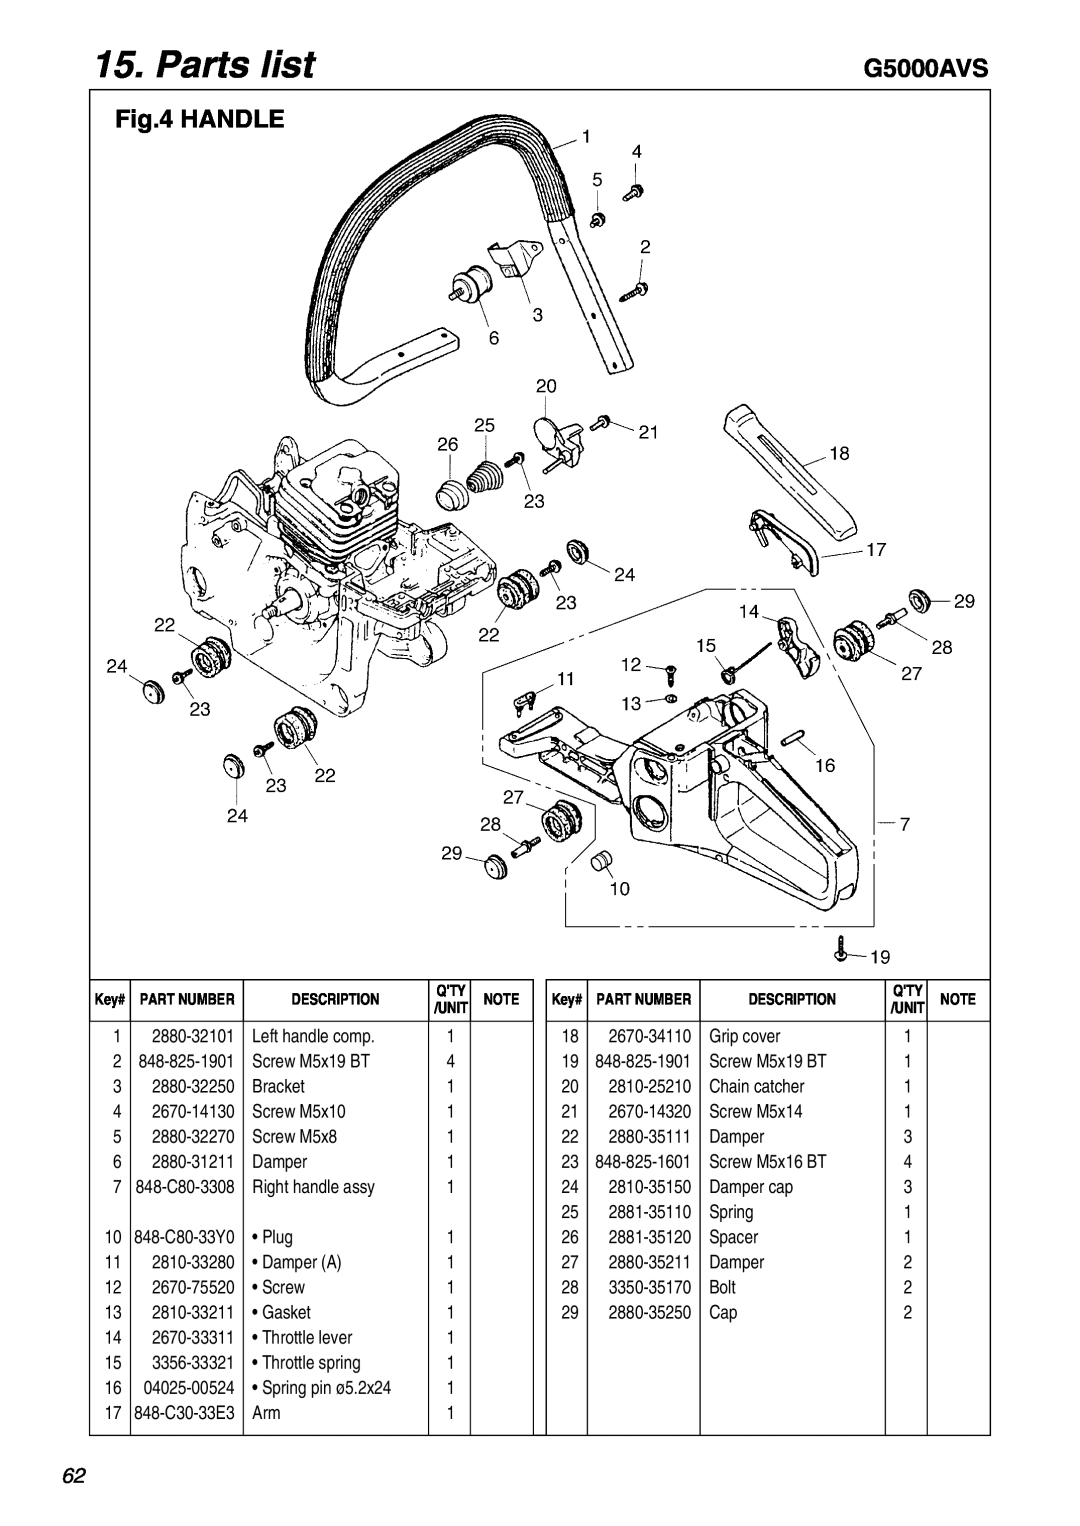 Zenoah G5000AVS manual Handle, Parts list, 848-C80-3308, 848-C80-33Y0, 848-C30-33E3 